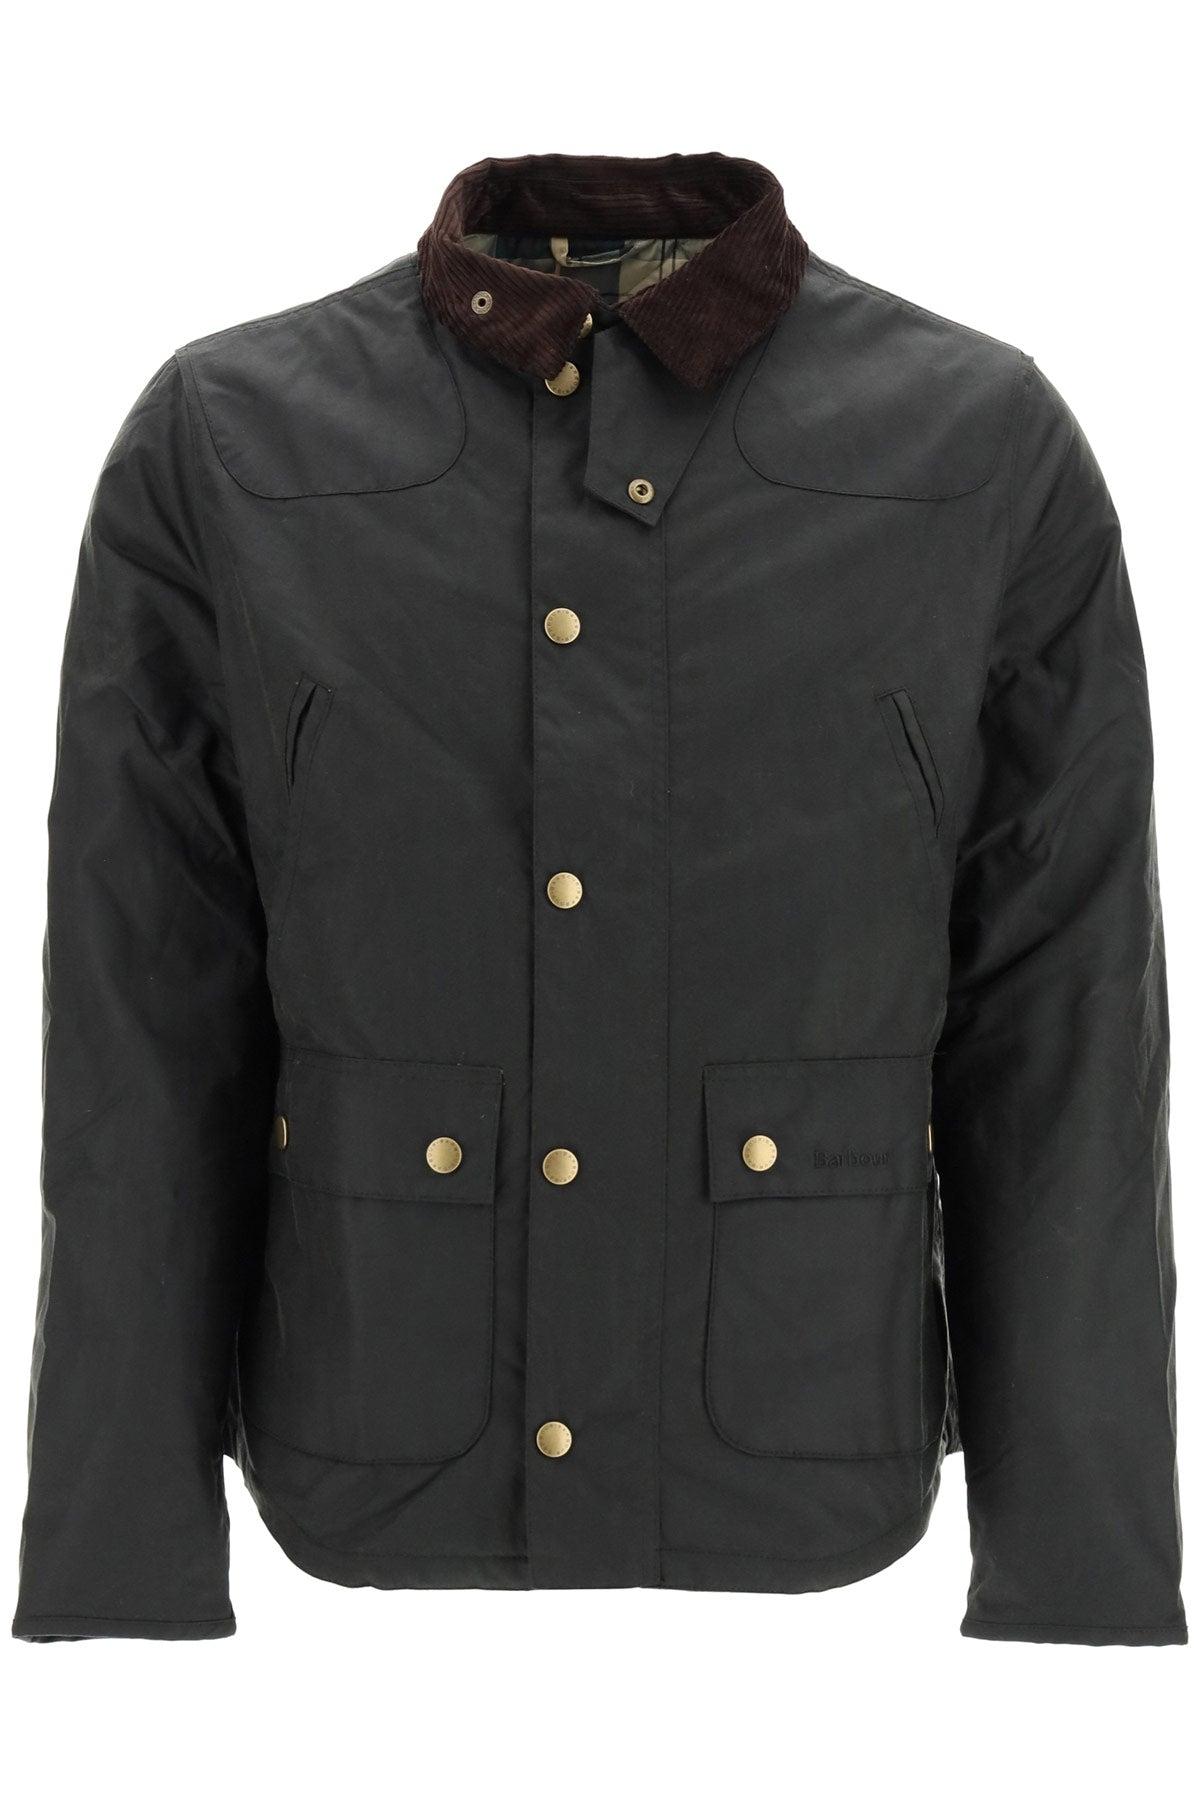 Barbour Cotton Reelin Coated Jacket in Green (Black) for Men | Lyst